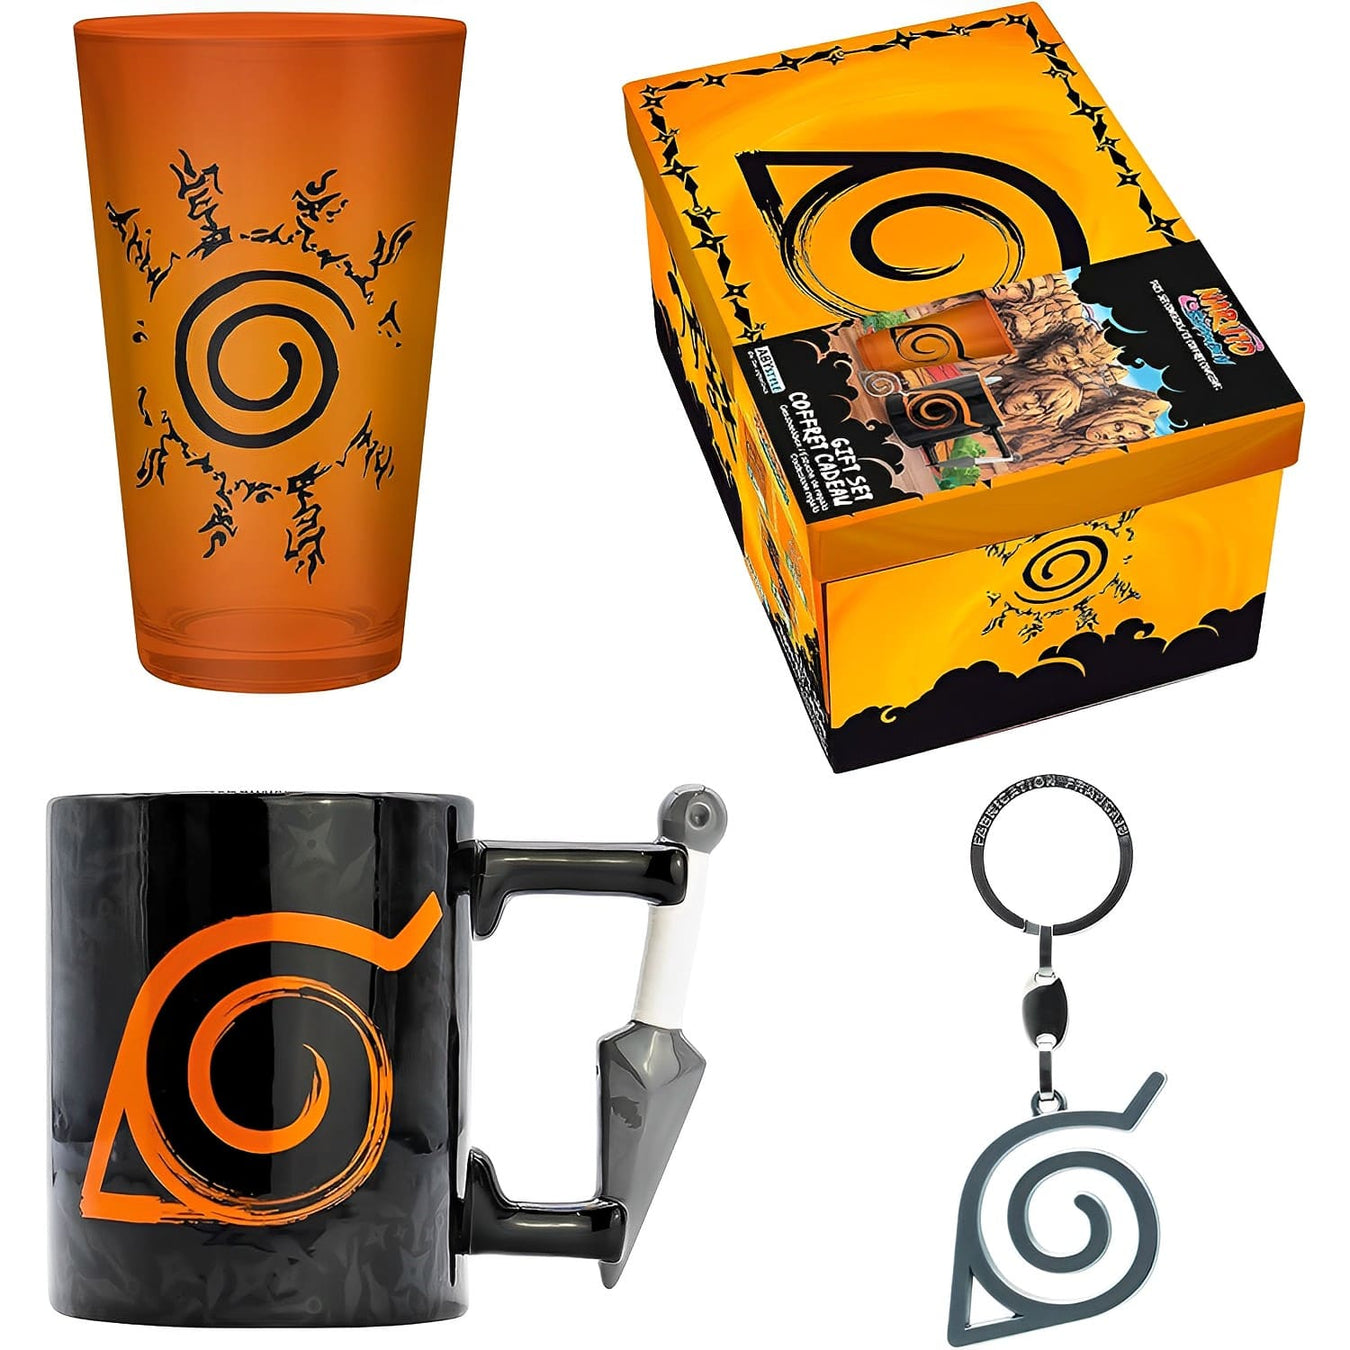 Naruto: Shippuden Premium Journal - Entertainment Earth